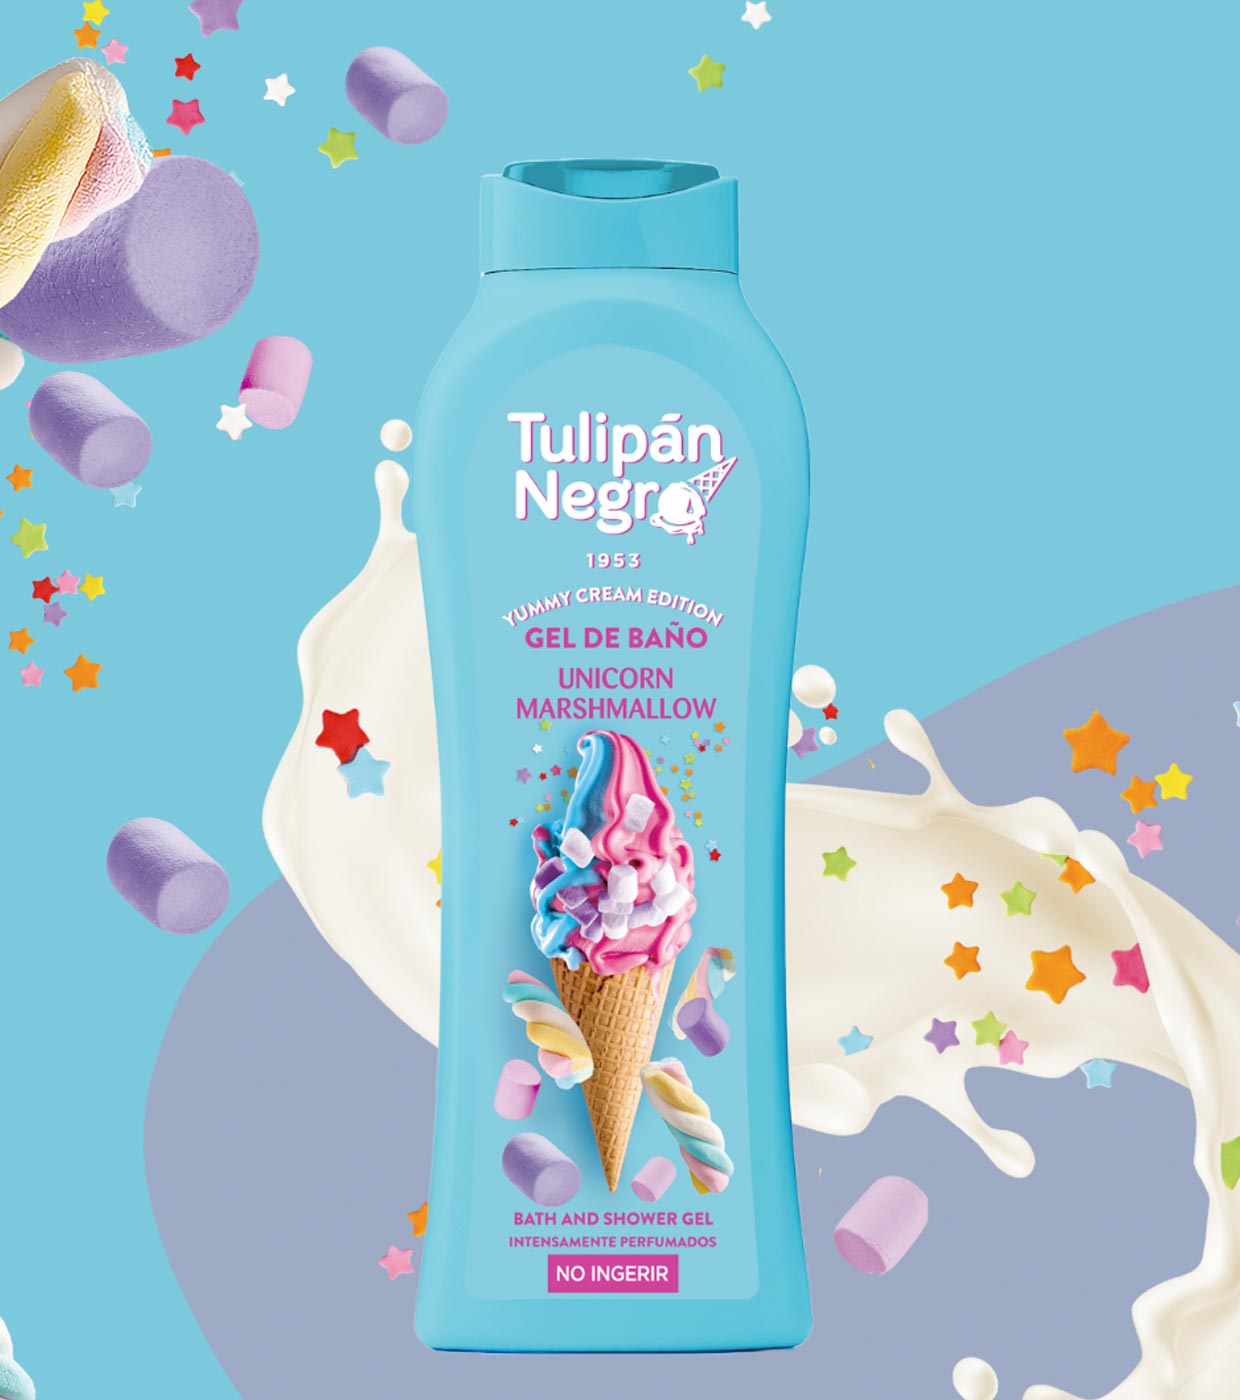 Buy Tulipán Negro - *Yummy Cream Edition* - Bath gel 650ml - Besitos de  Fresa